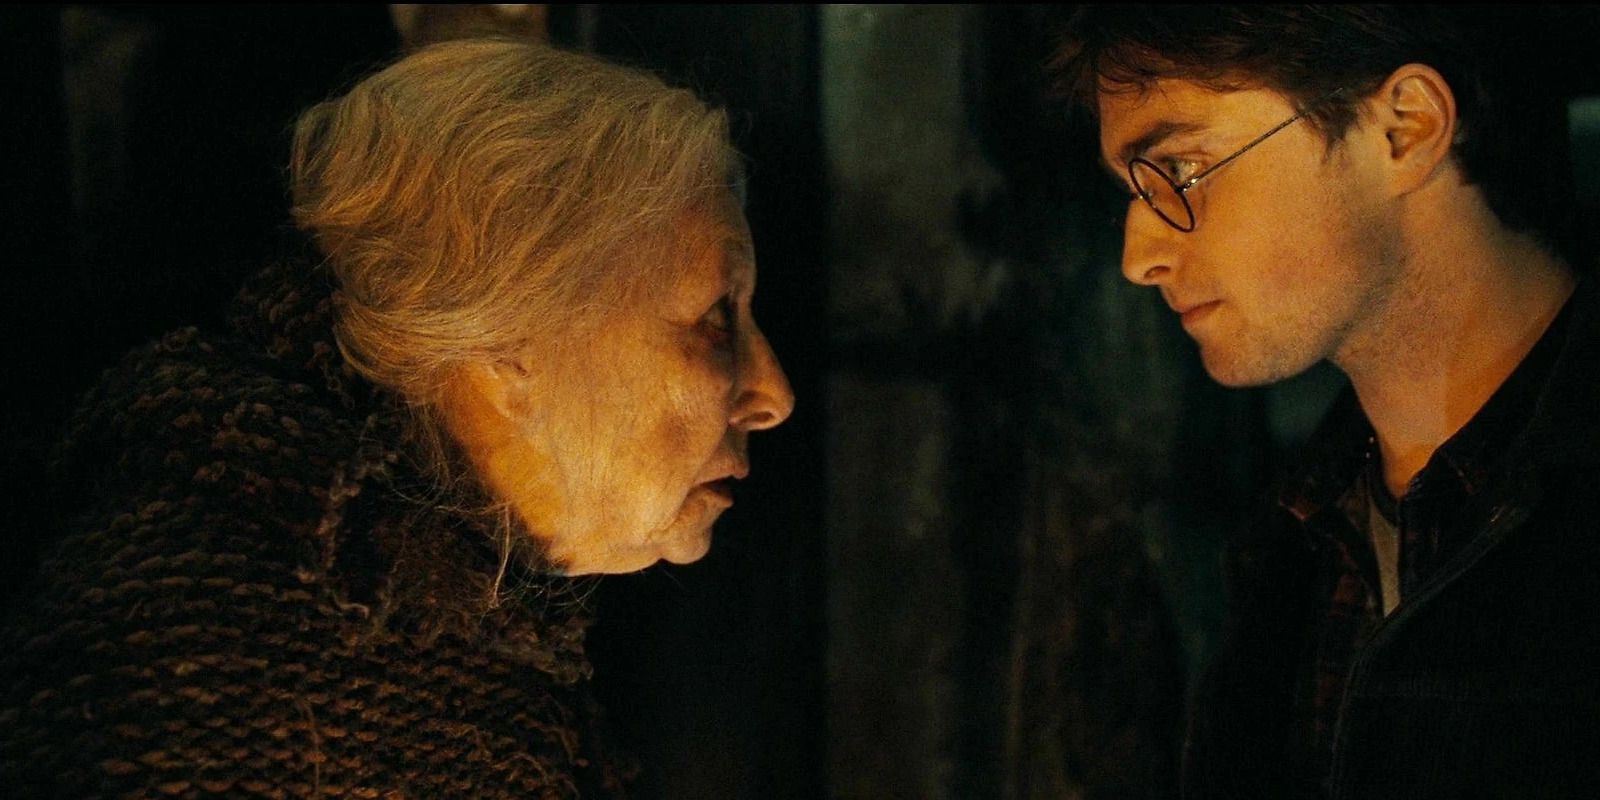 Bathilda Bagshot (Hazel Douglas) and Harry Potter (Daniel Radcliffe) in a dark room in Deathly Hallows Part 1